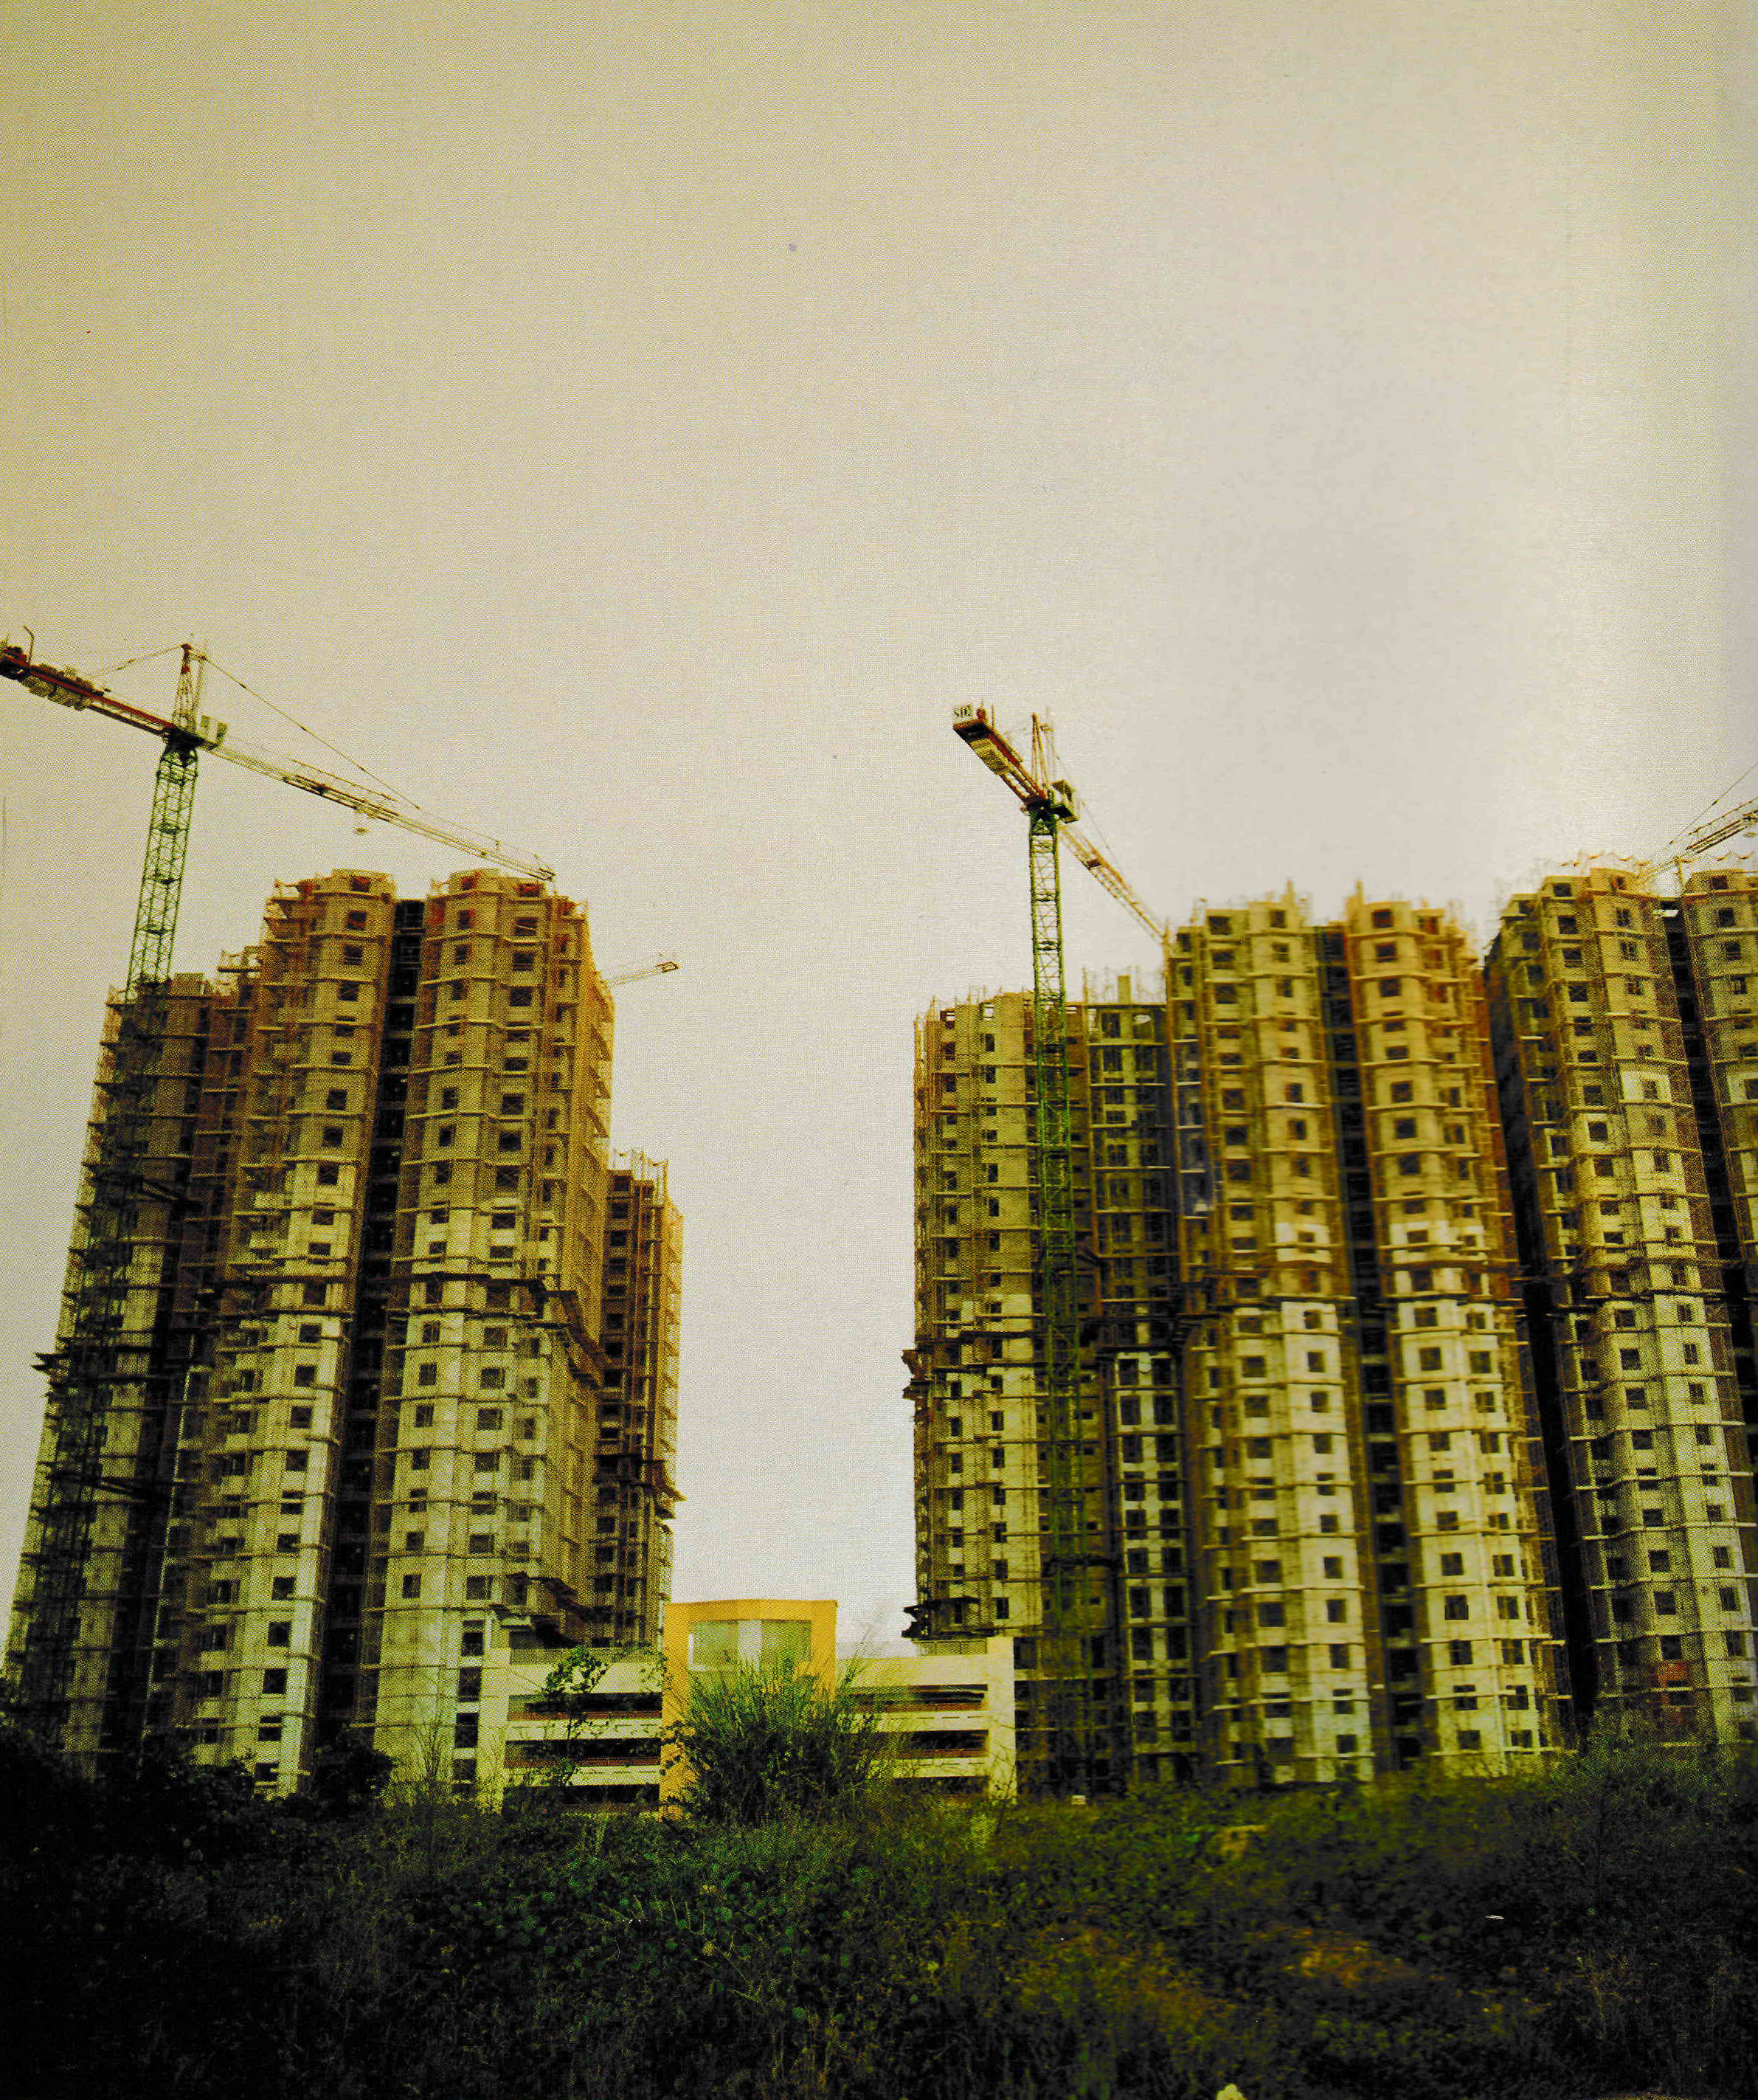 Image of an urban skyline under construction